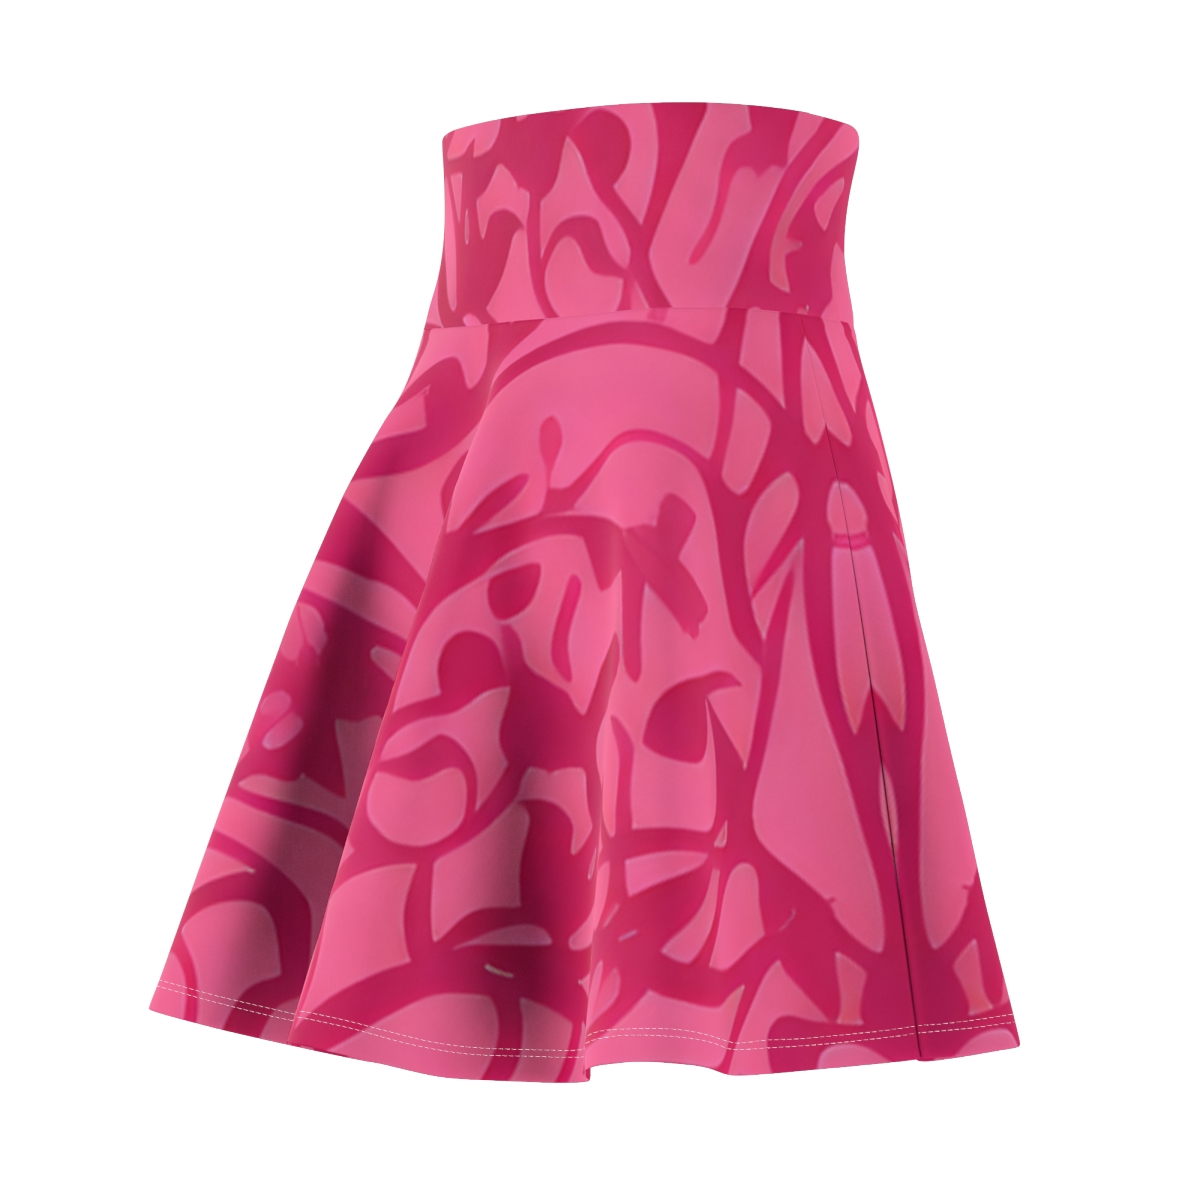 Blush on Blush: Women's Skater Skirt product thumbnail image